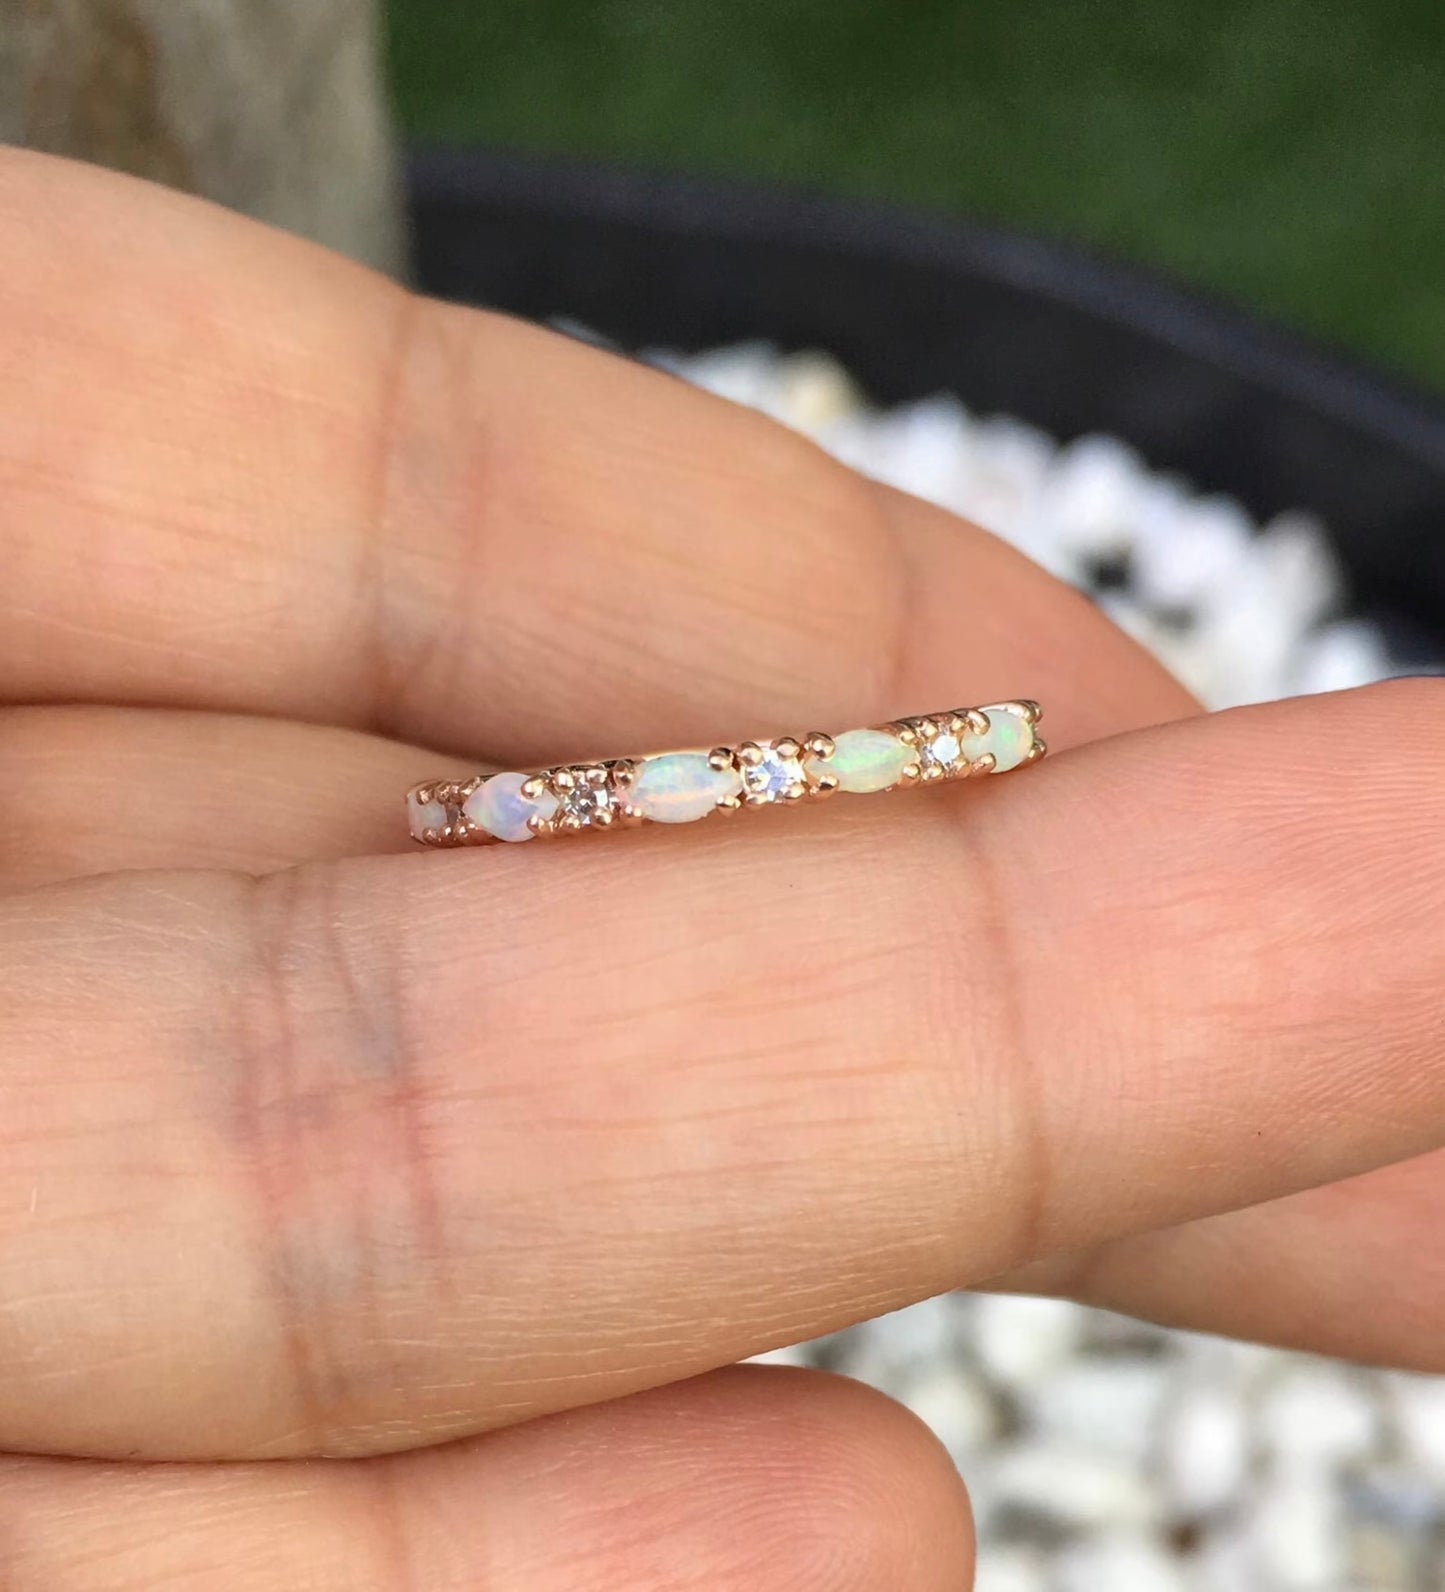 Opal Diamond Band/ Unique Opal Stacking Ring/ Prong Set Alternating Opal Diamond Wedding Band/ Vintage Looking Opal Diamond Ring/ October Birthstone Ring/ 10K 14K 18K or Platinum